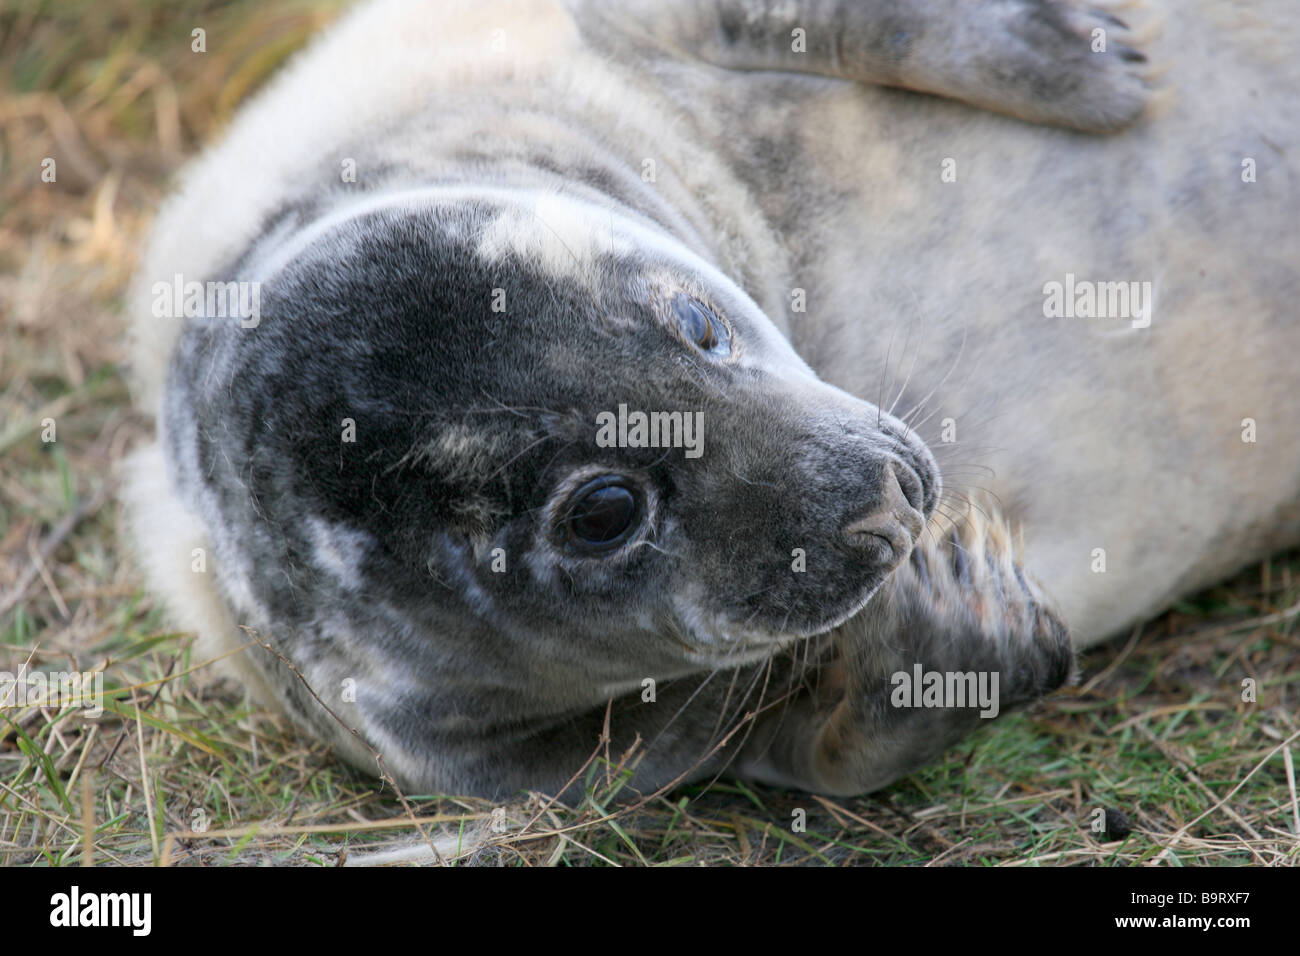 North Atlantic Grey Seal Pup Halichoerus grypus Donna Nook RAF bombing range Nature Reserve Lincolnshire England UK Stock Photo